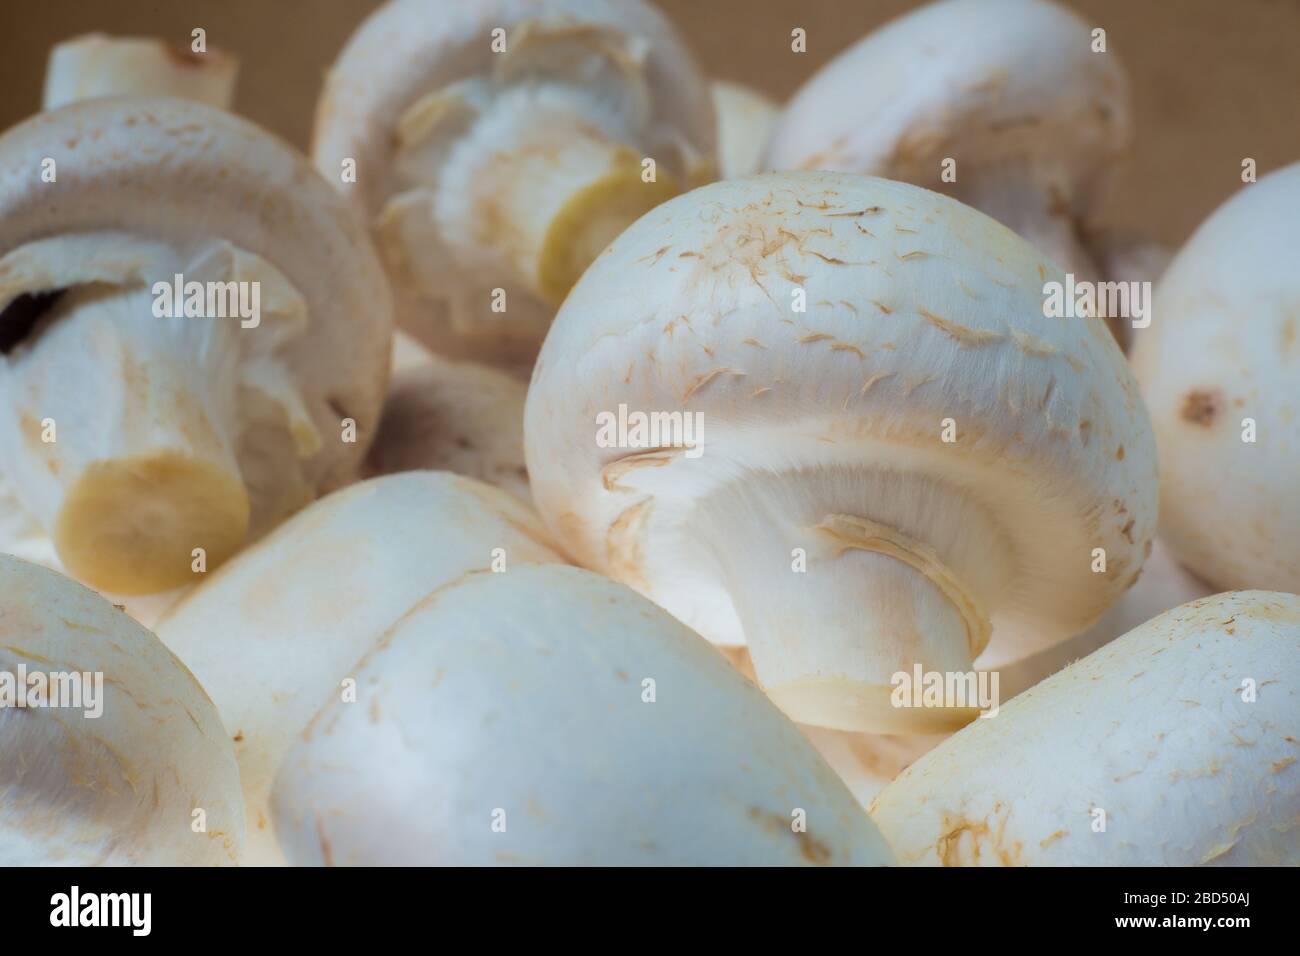 https://c8.alamy.com/comp/2BD50AJ/close-up-bunch-of-fresh-picked-mushrooms-on-the-table-ready-for-food-preparing-healthy-nutrition-bio-organic-grown-meal-2BD50AJ.jpg